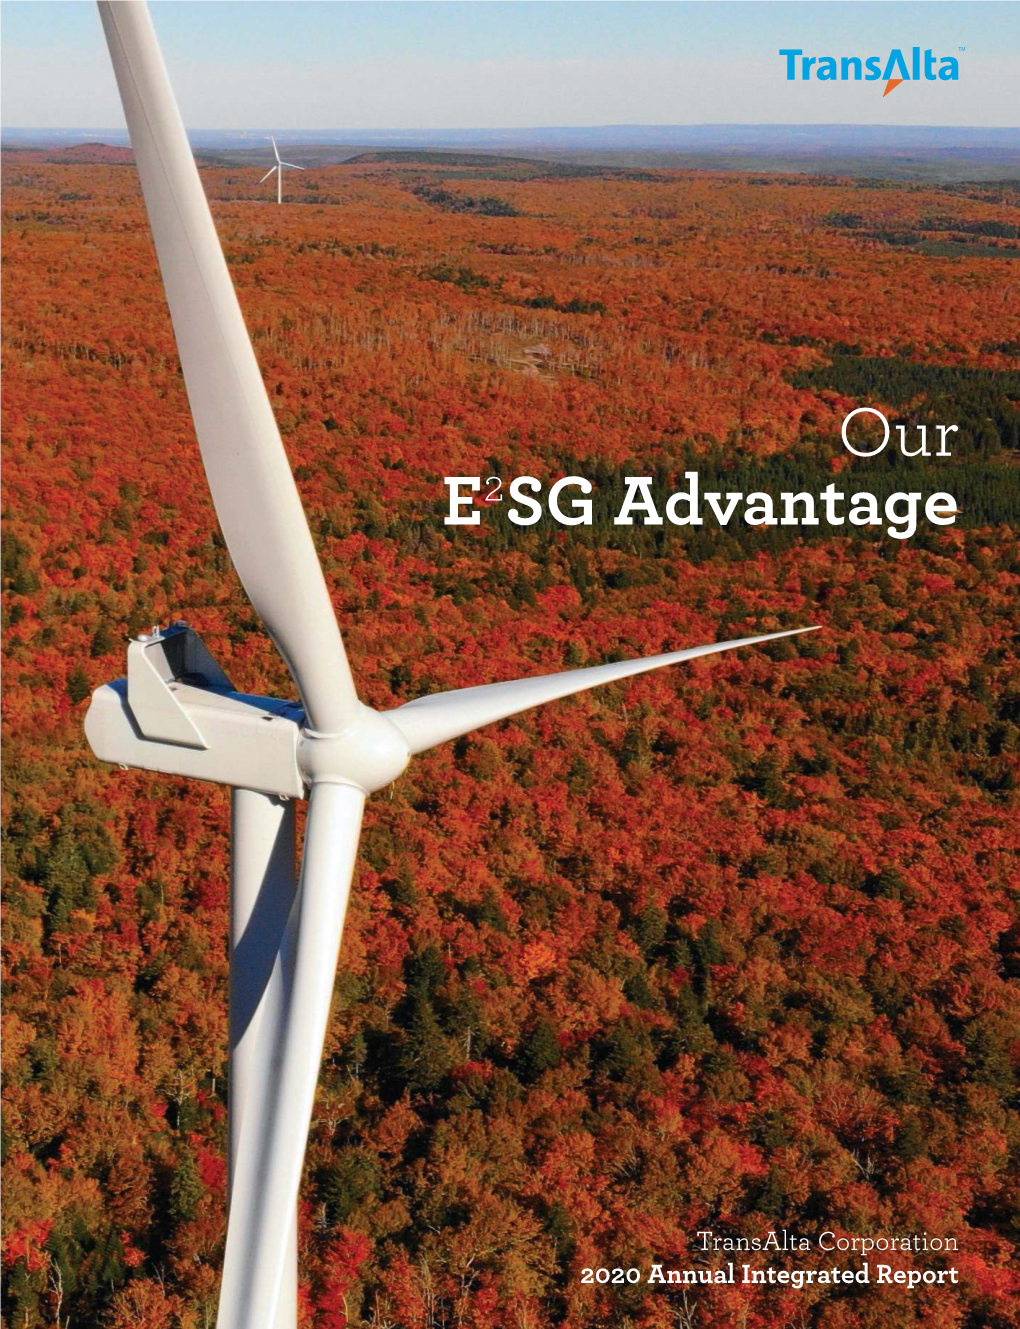 Our E2SG Advantage